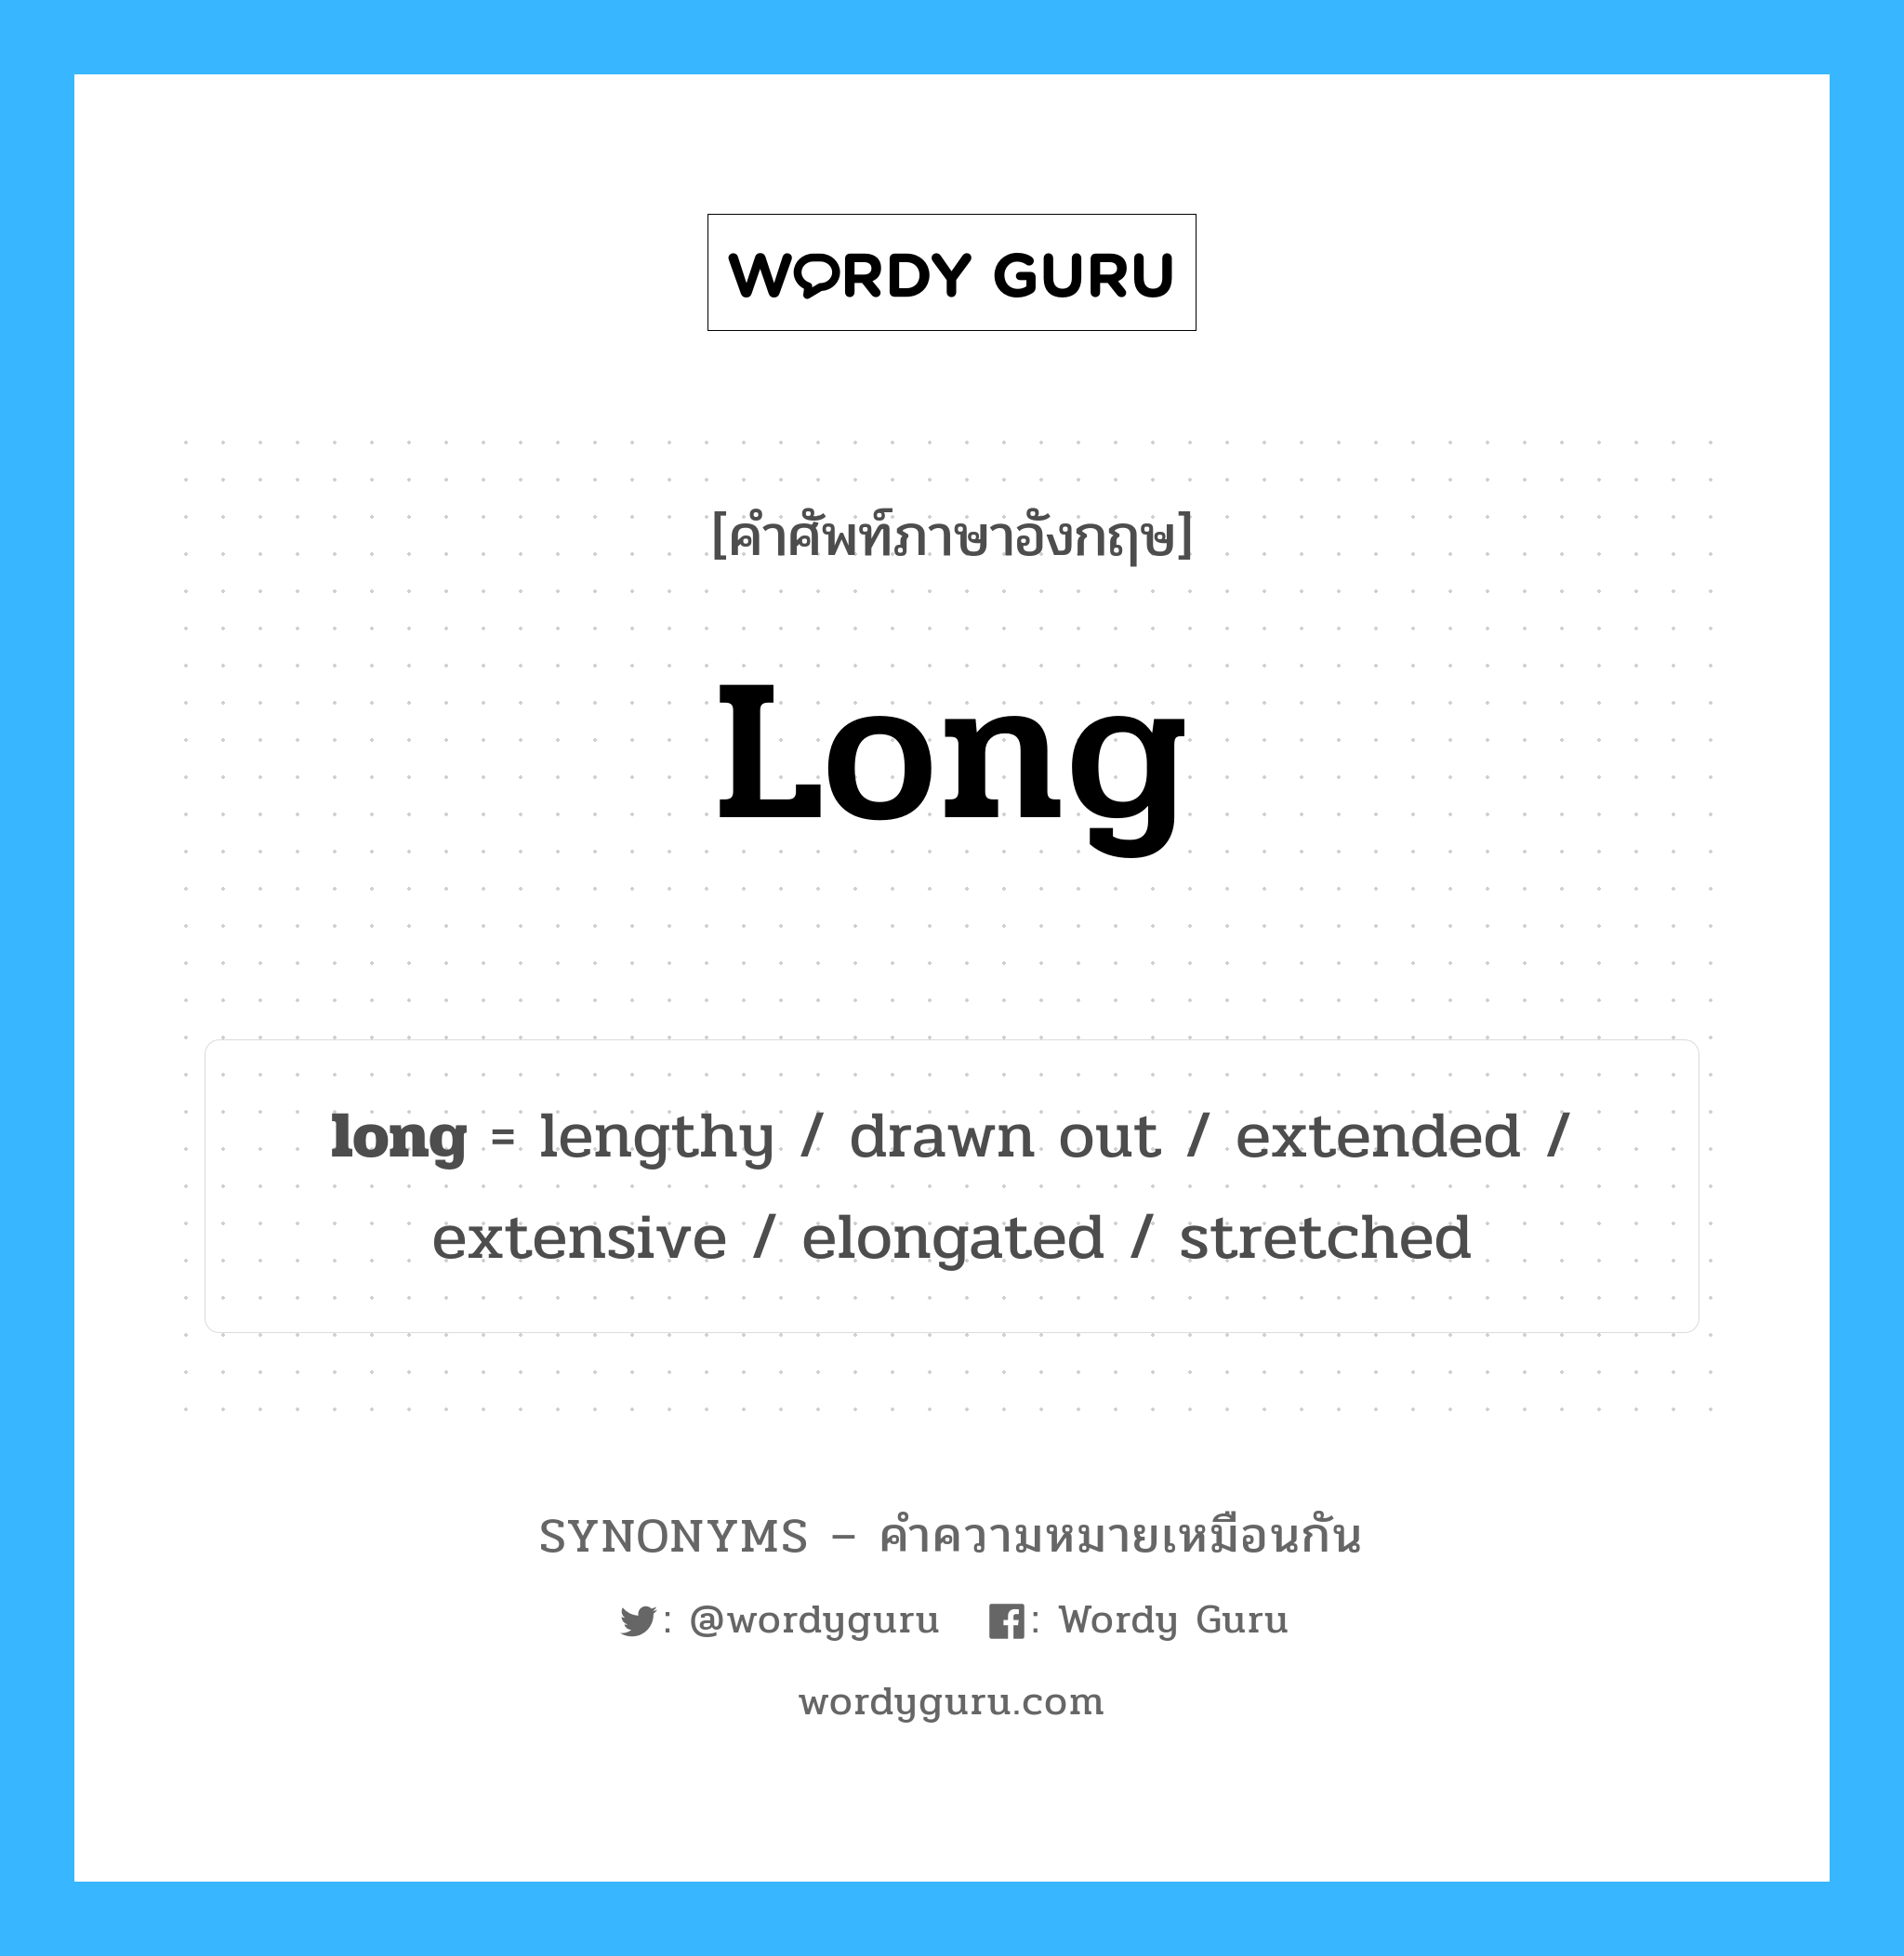 elongated เป็นหนึ่งใน long และมีคำอื่น ๆ อีกดังนี้, คำศัพท์ภาษาอังกฤษ elongated ความหมายคล้ายกันกับ long แปลว่า ยาว หมวด long